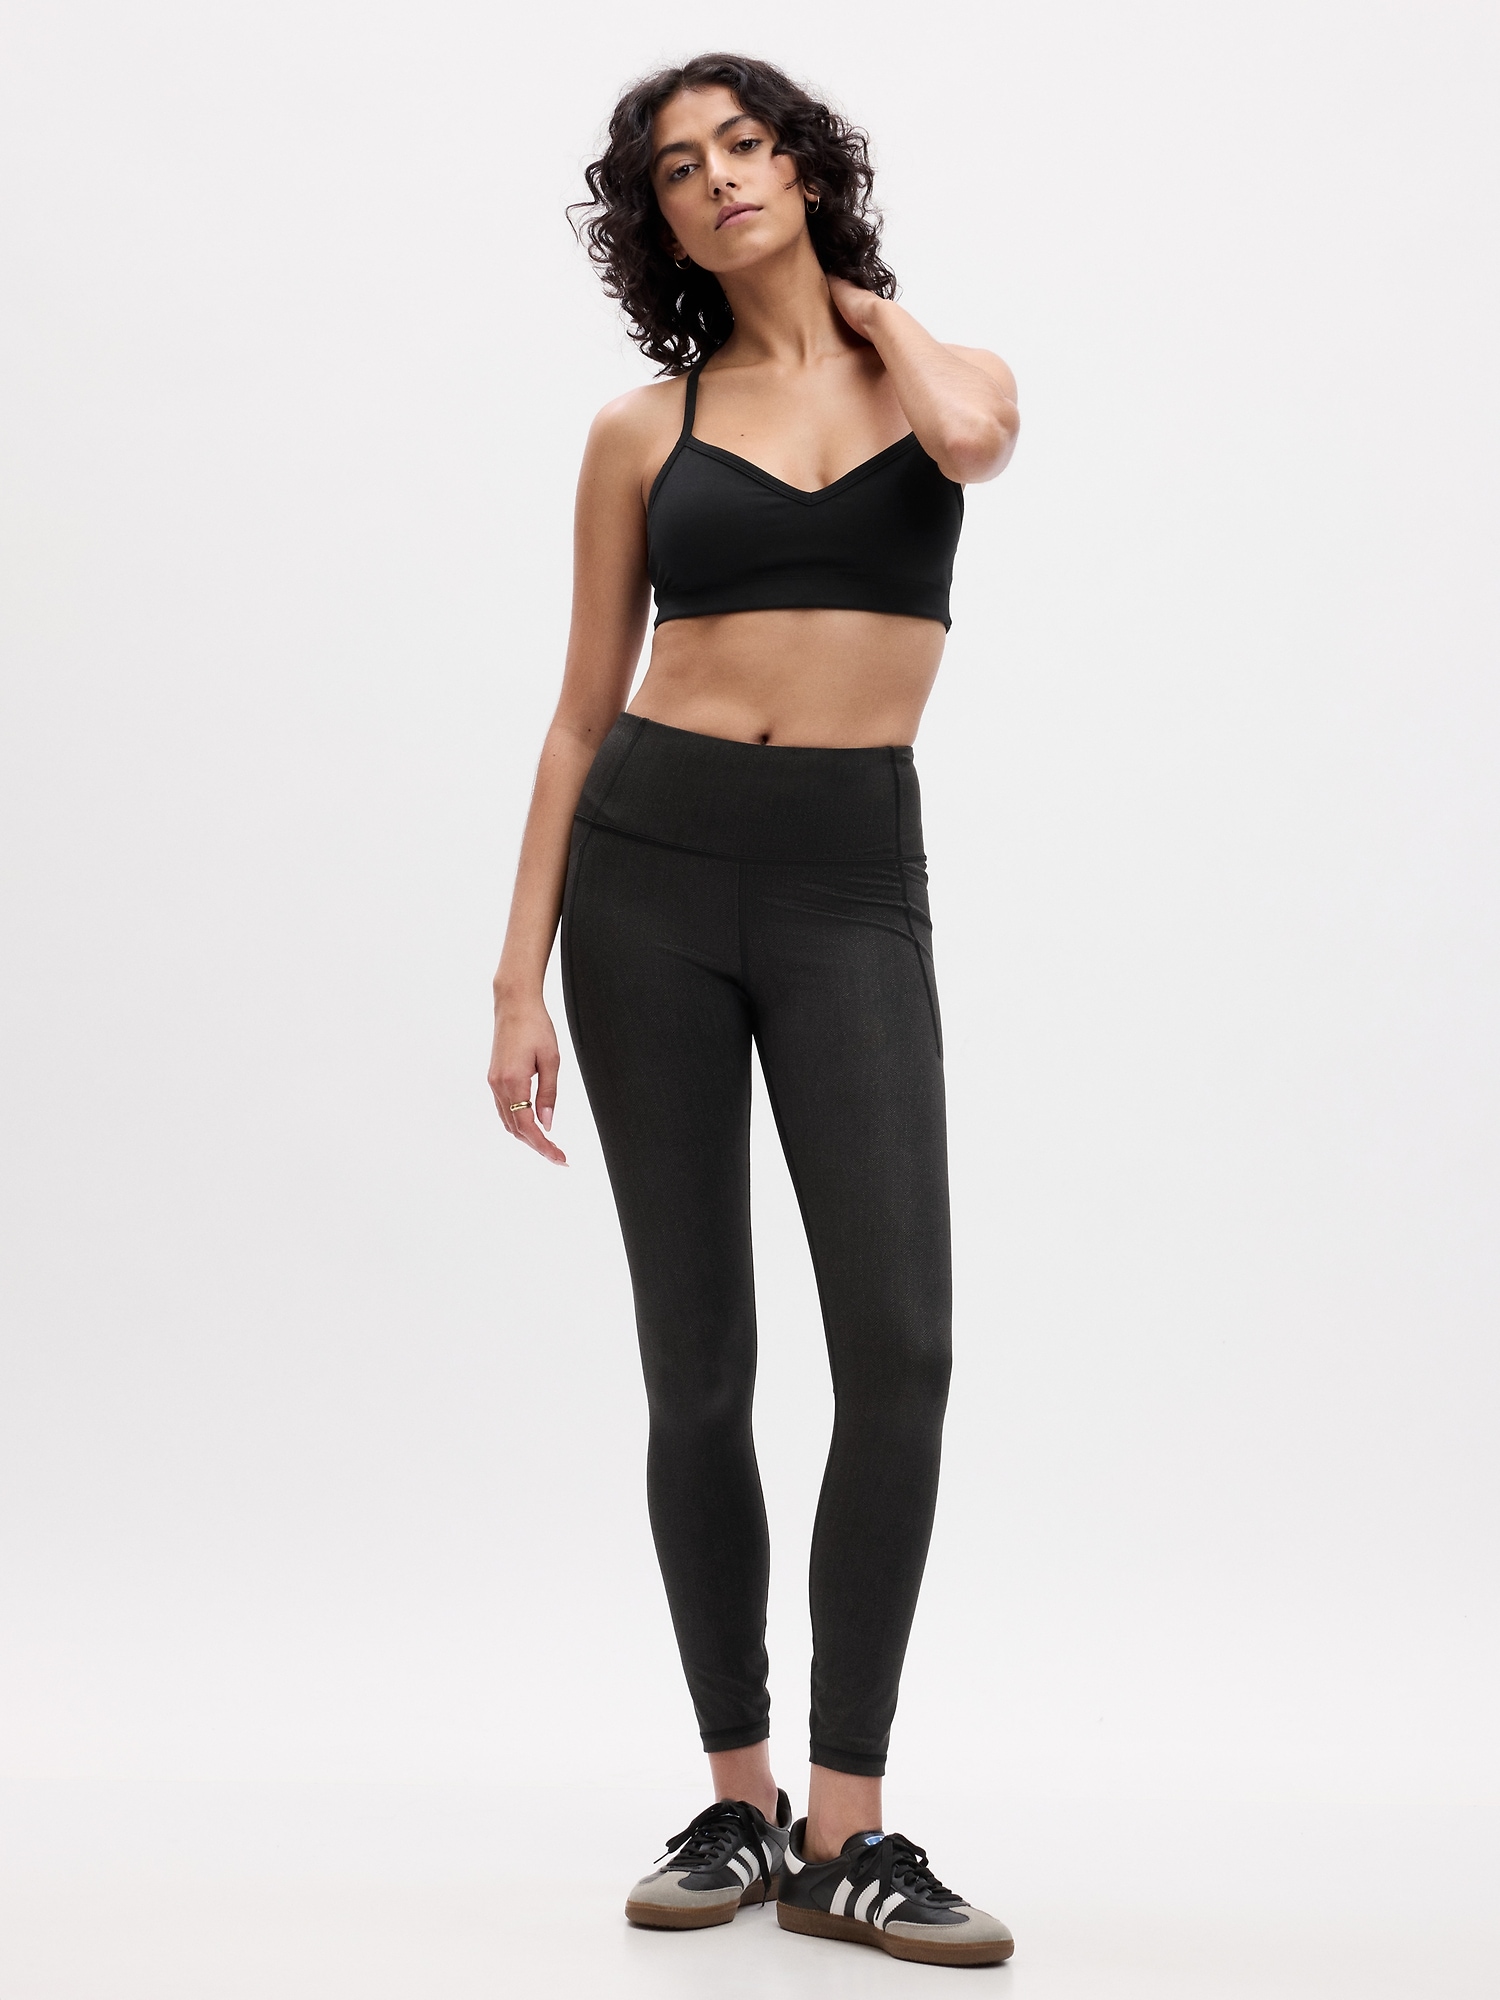 GAP Woman's Black Solid colour high-rise leggings